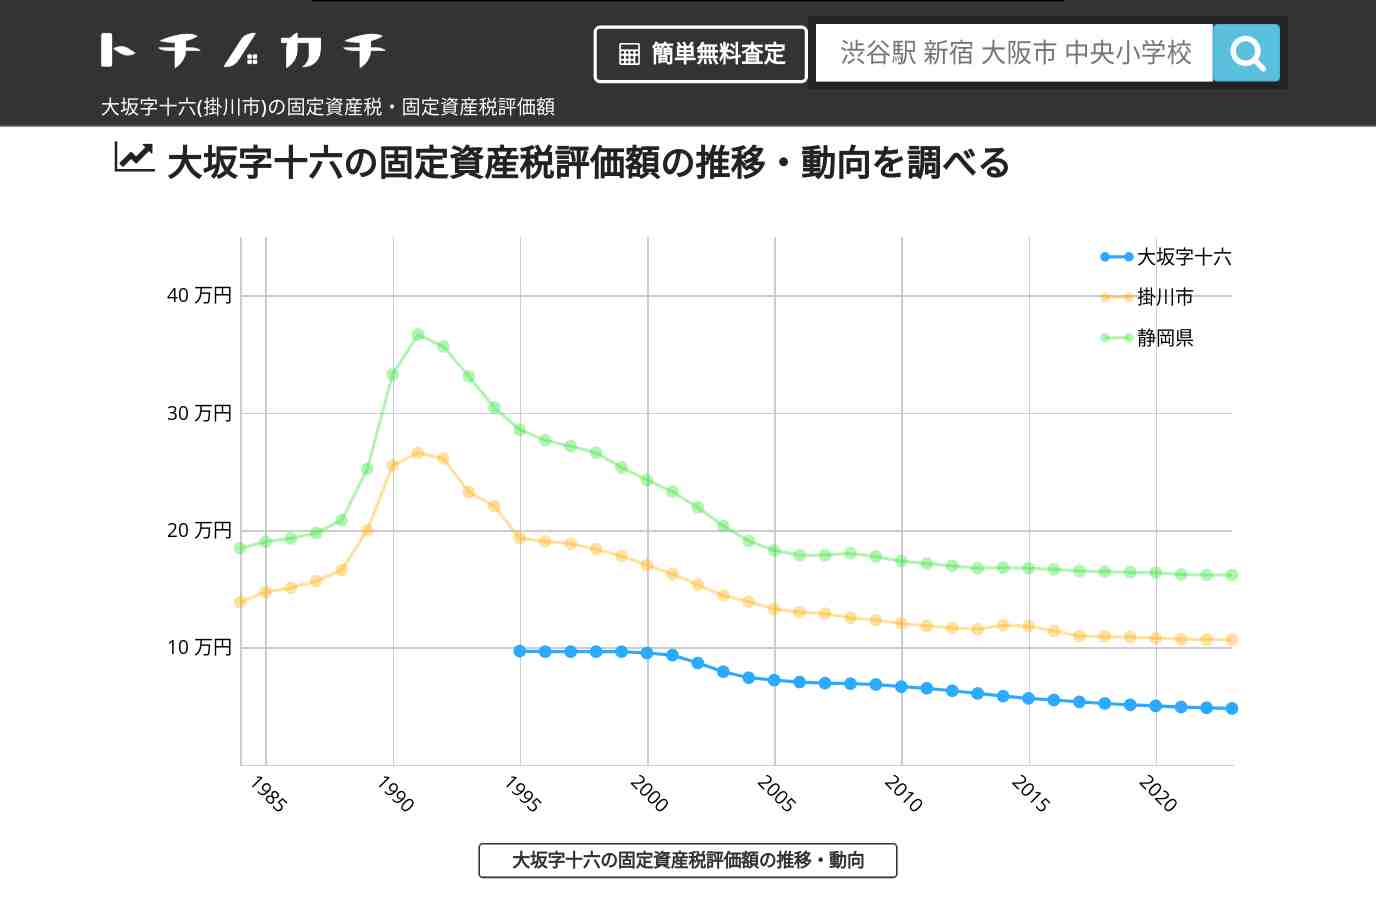 大坂字十六(掛川市)の固定資産税・固定資産税評価額 | トチノカチ